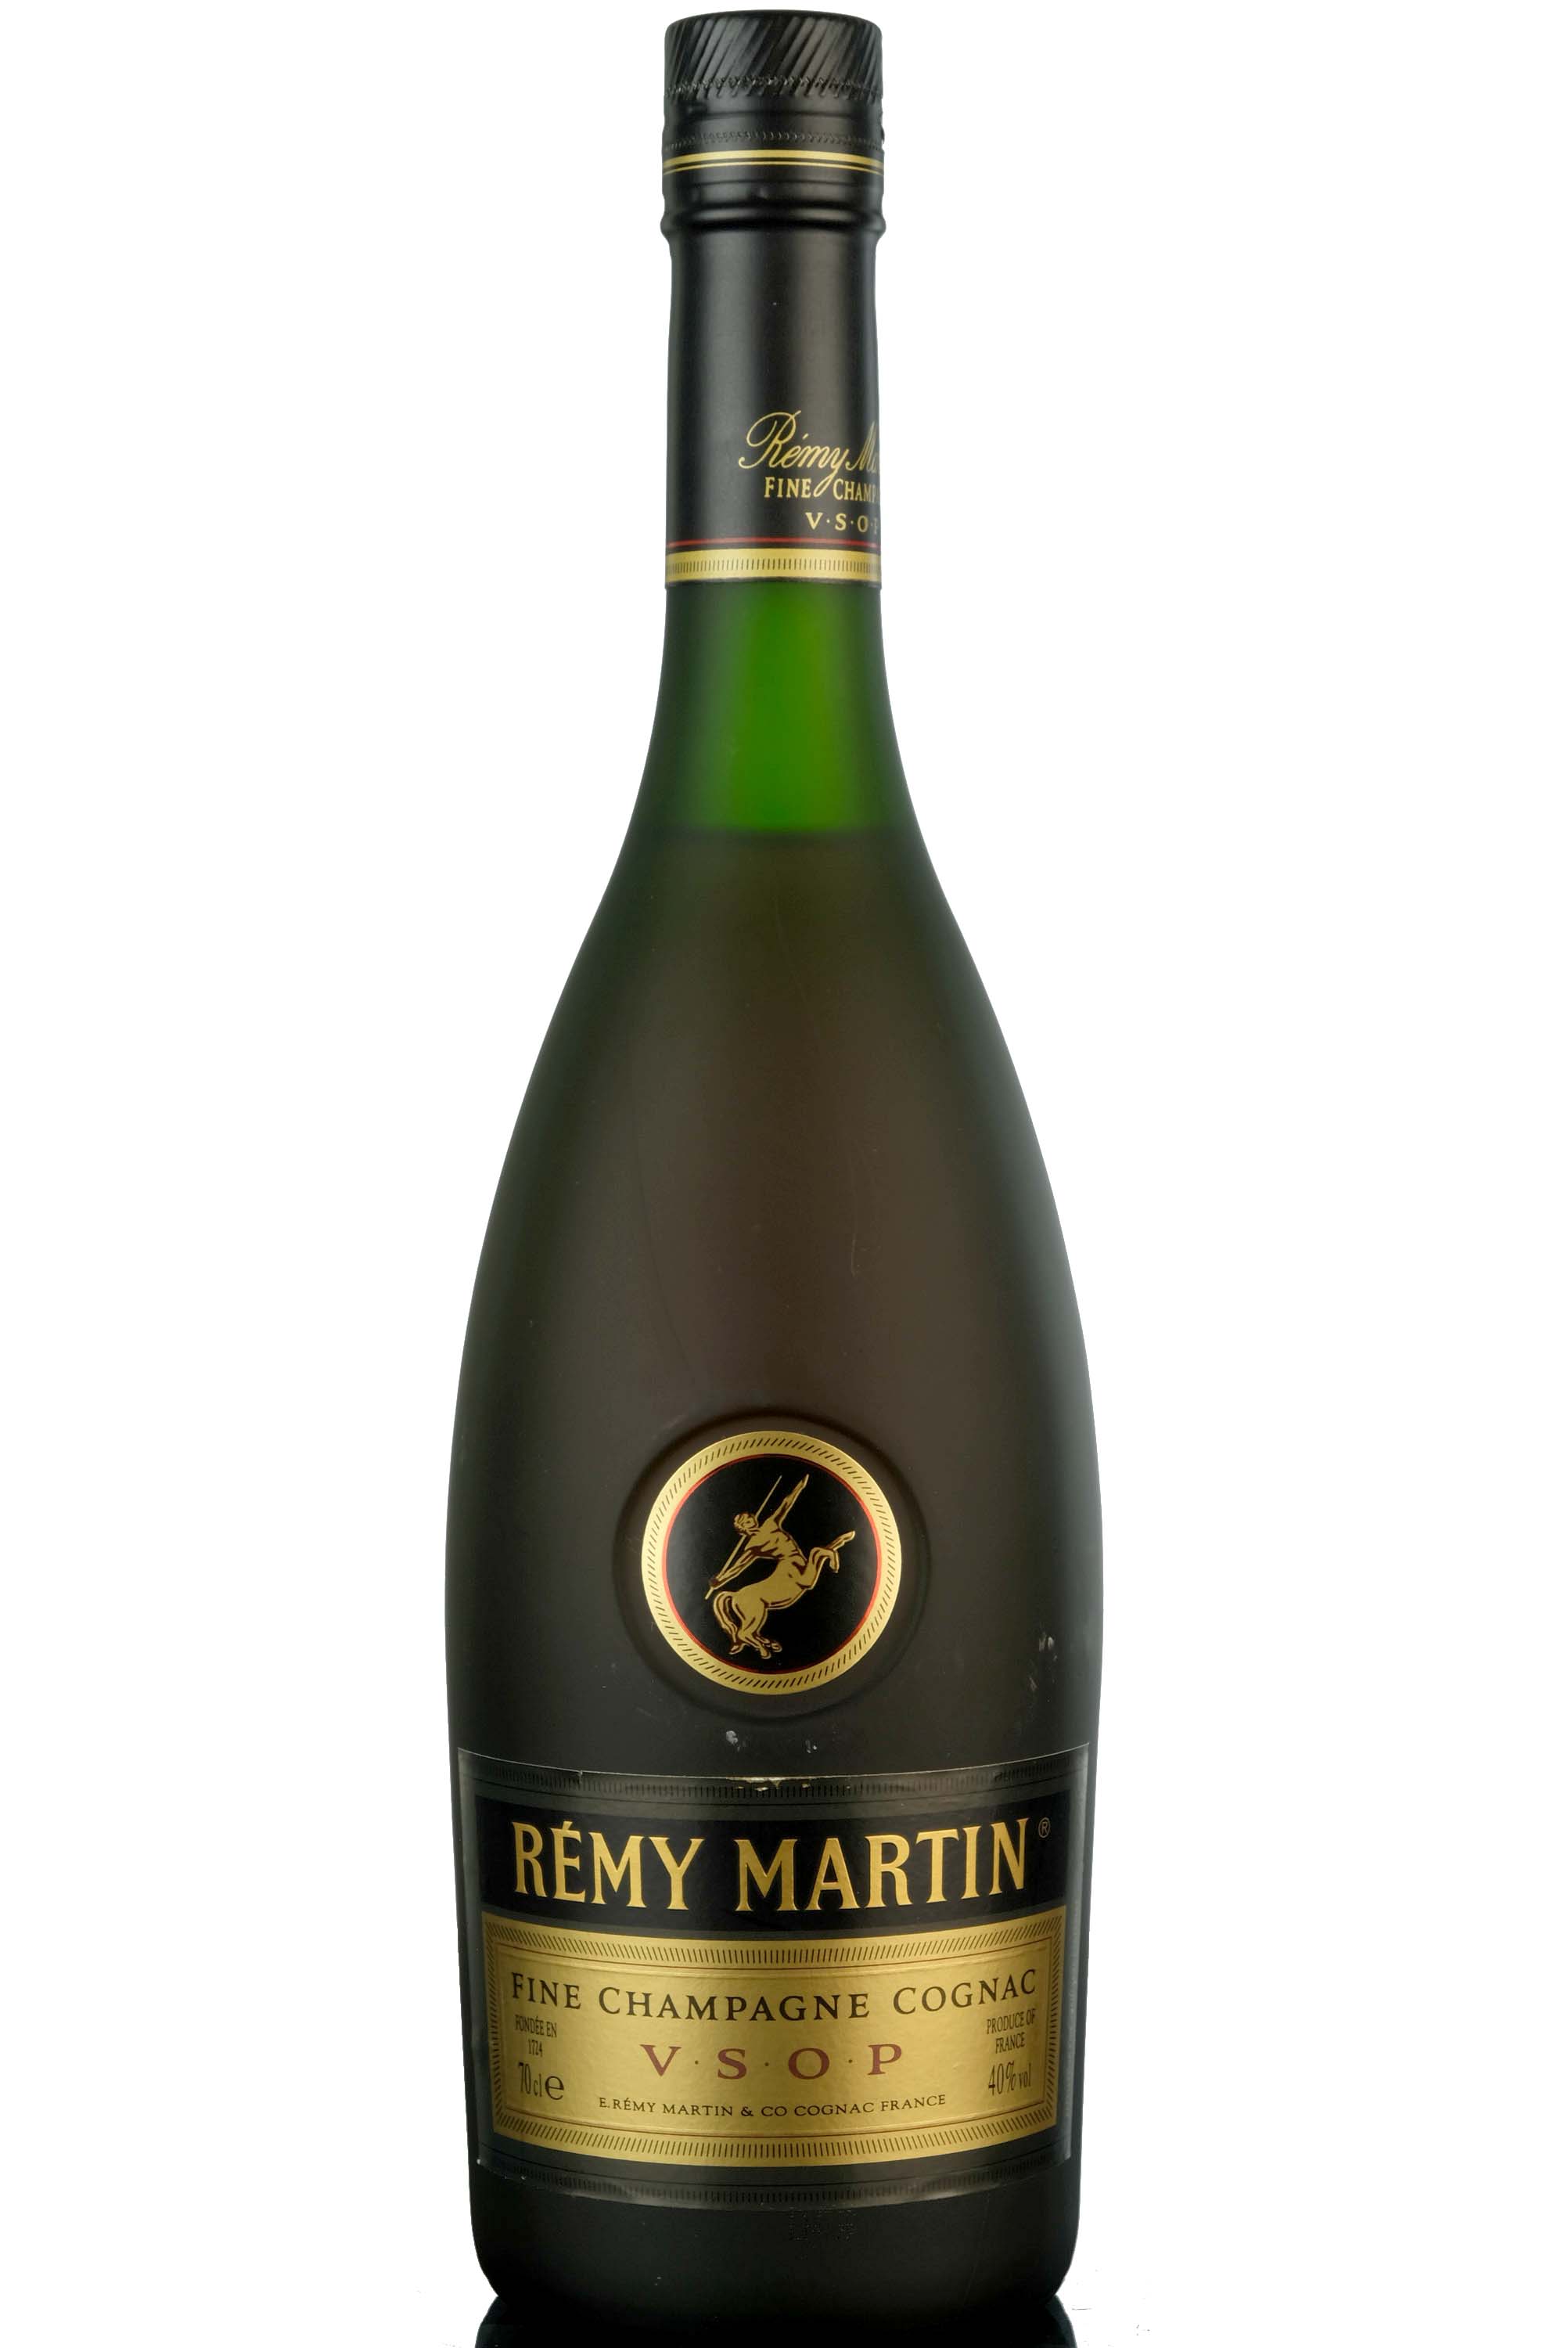 Remy Martin VSOP Champagne Cognac